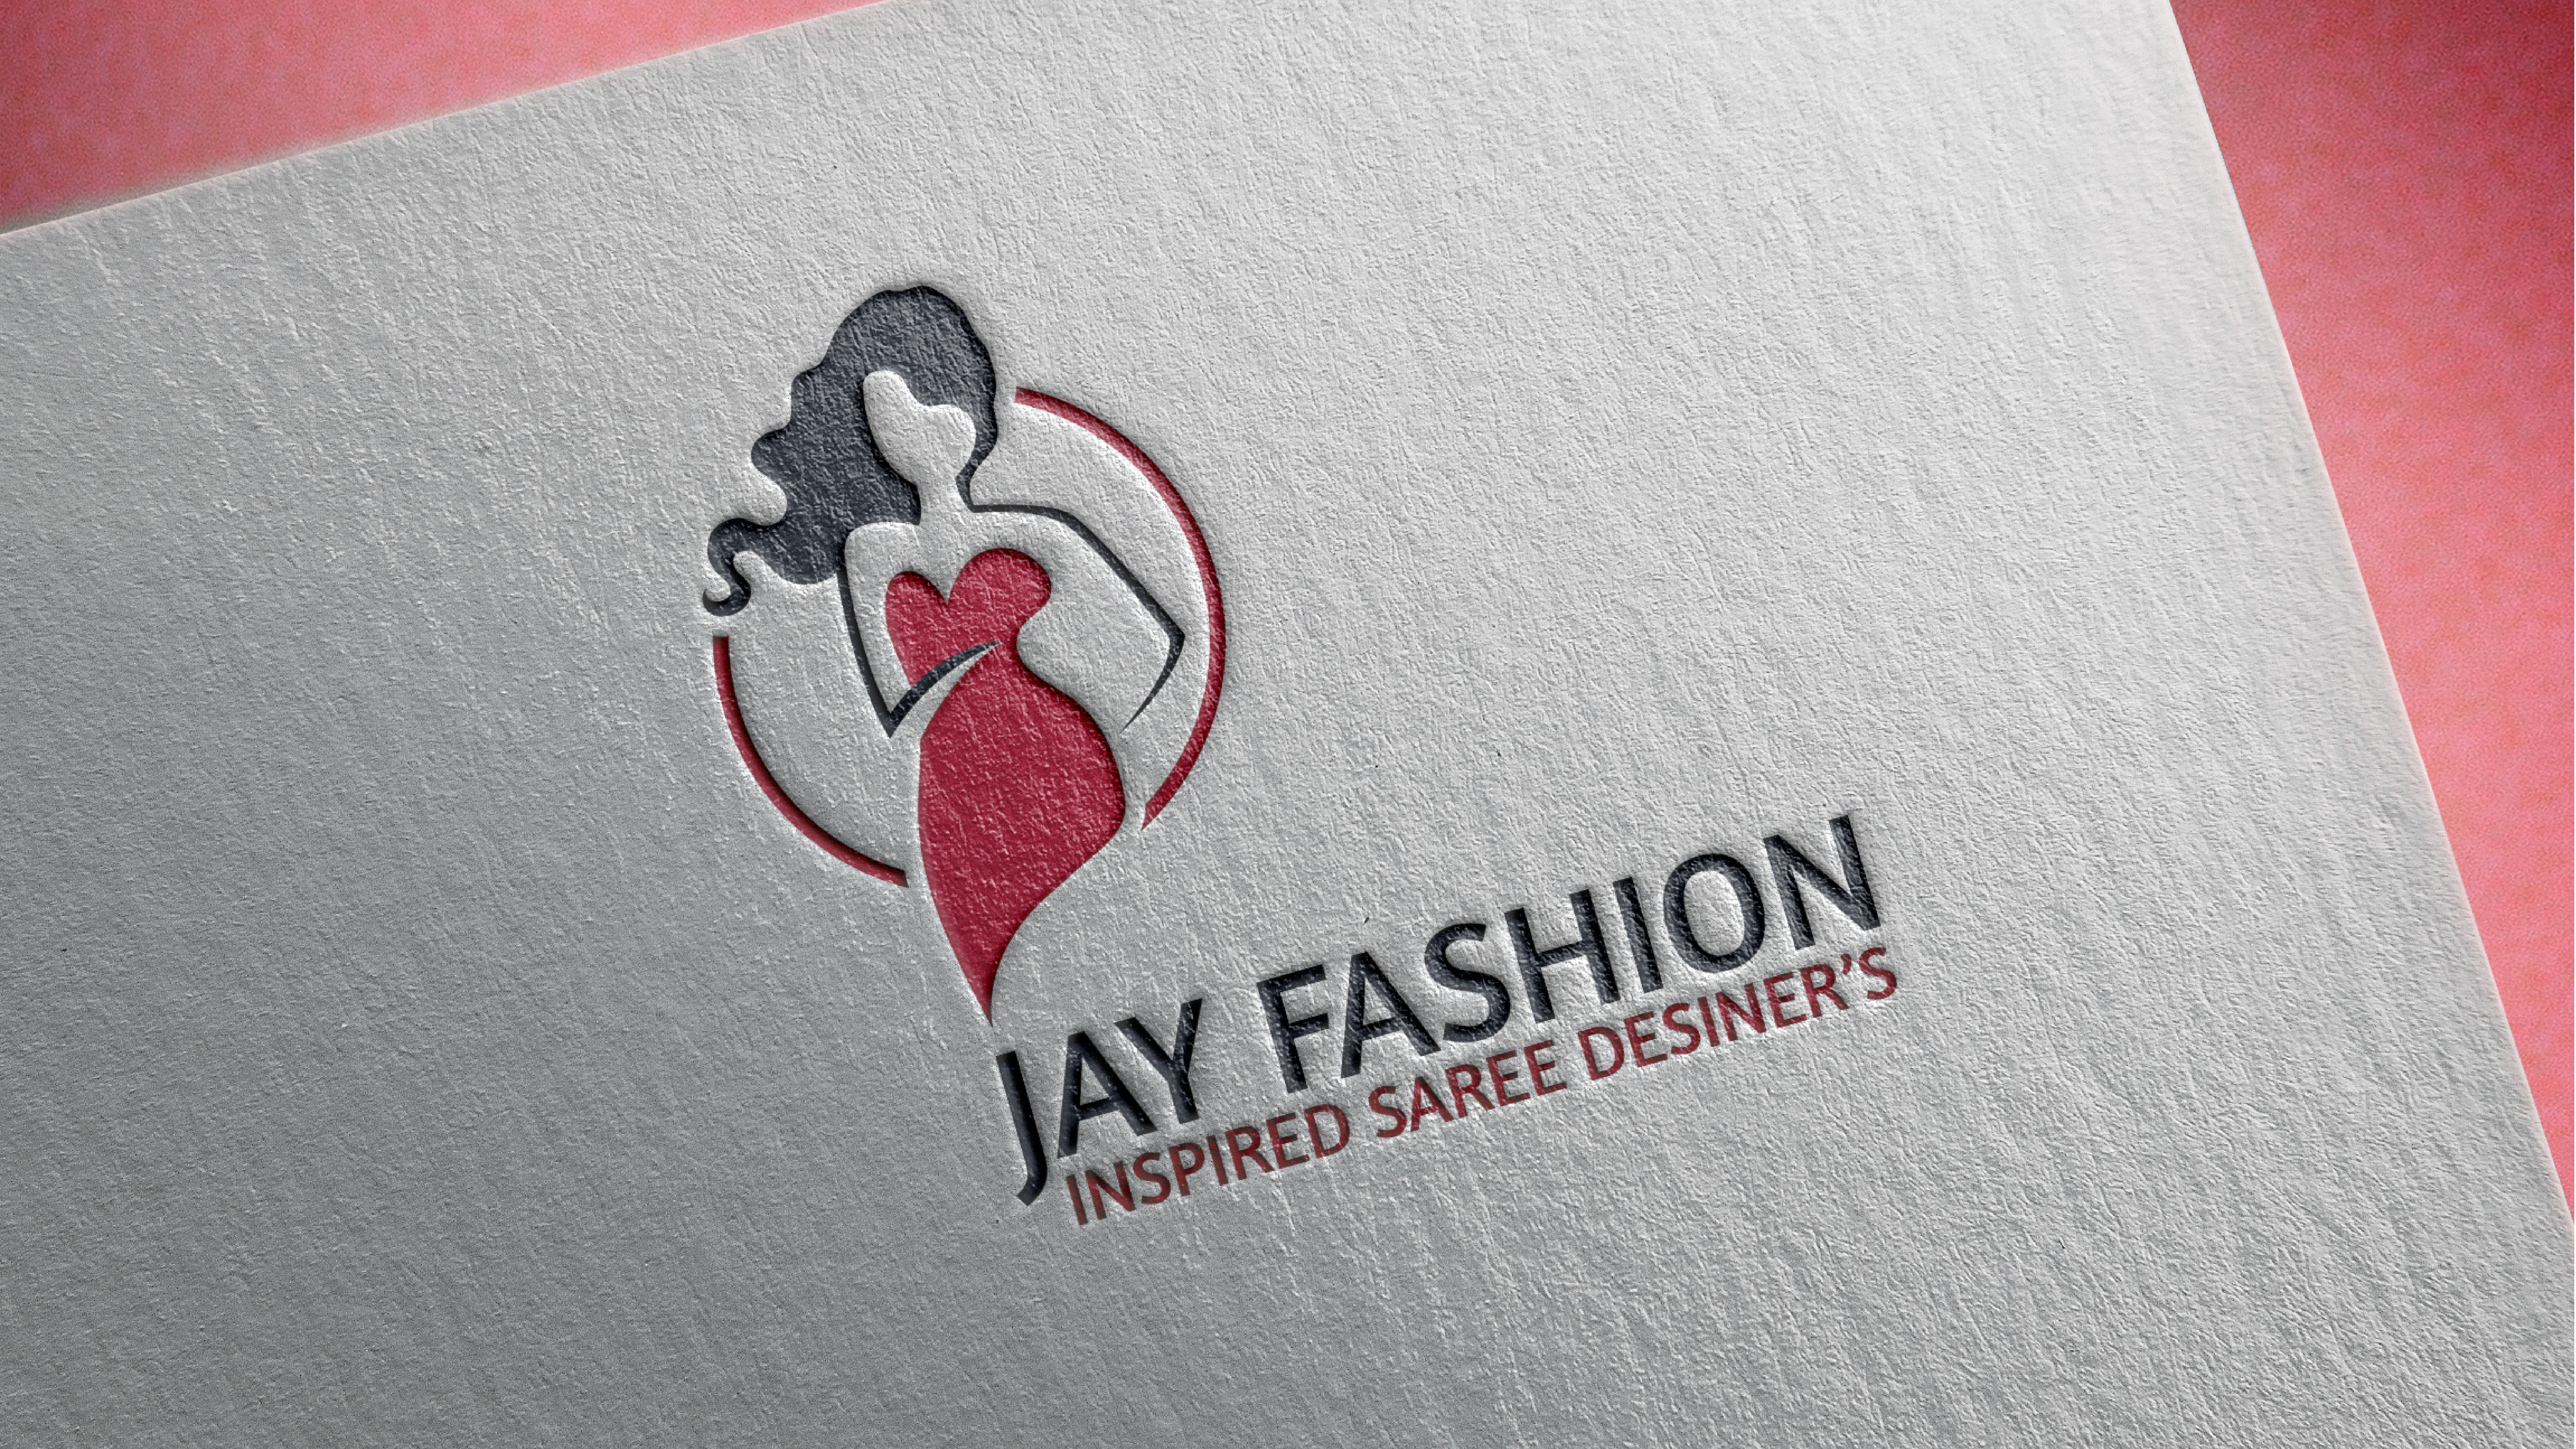 jay-fashion